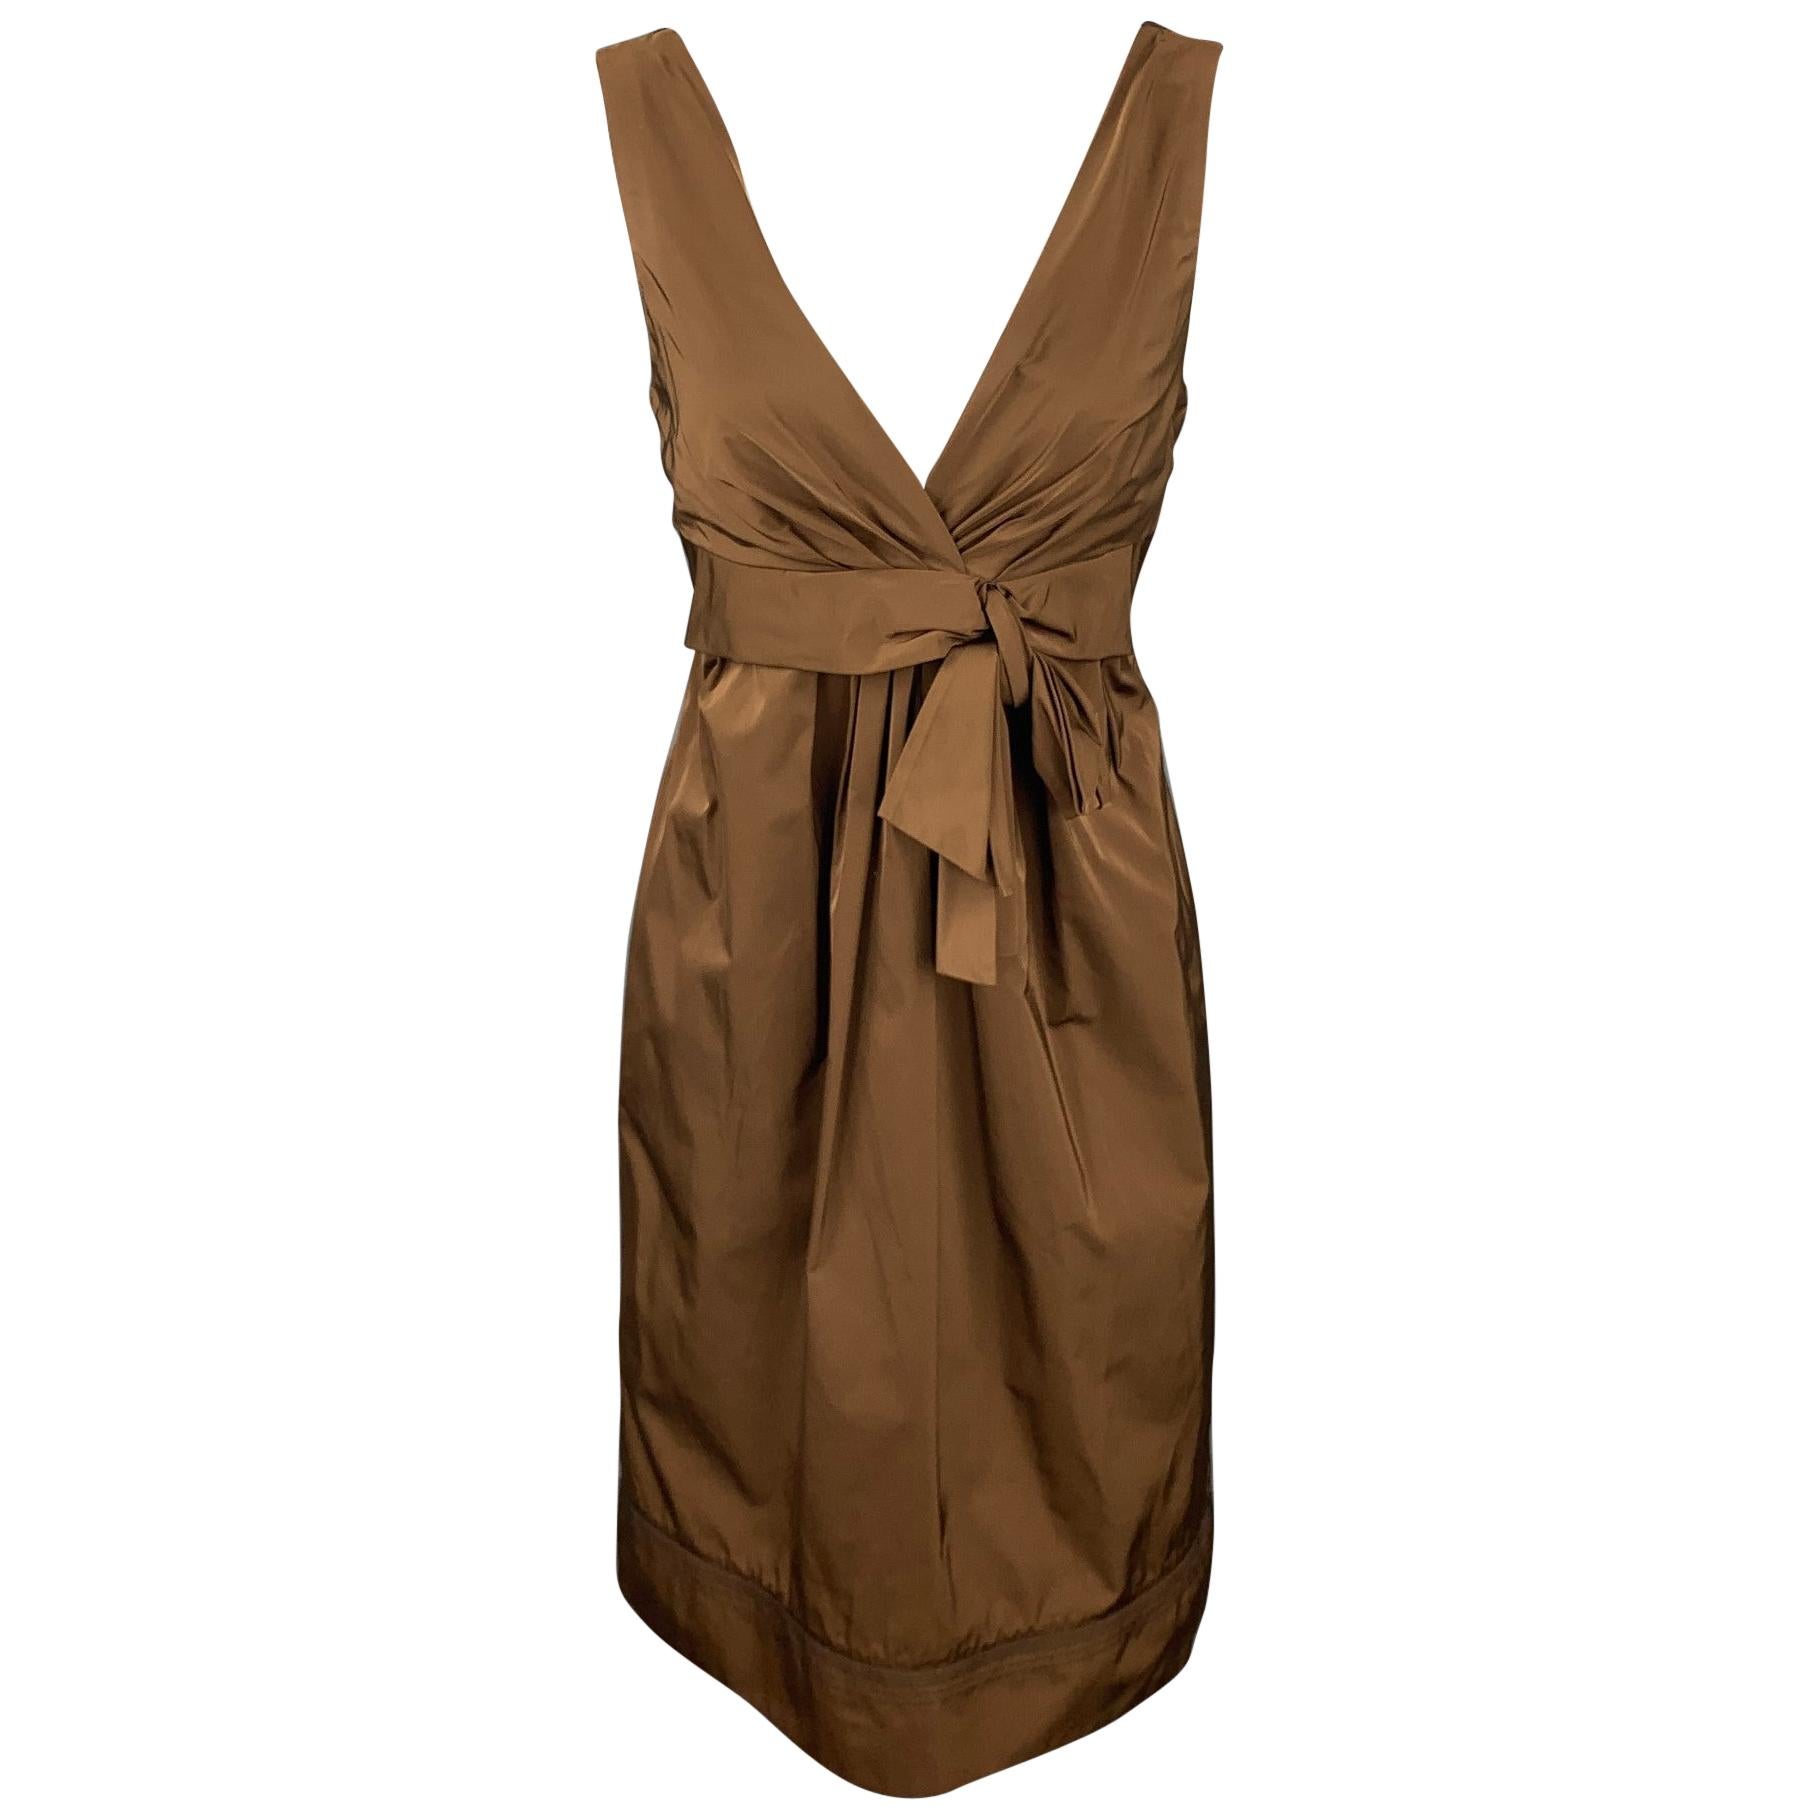 LIDA BADAY Size 8 Brown Polyester Sleeveless Sheath Dress